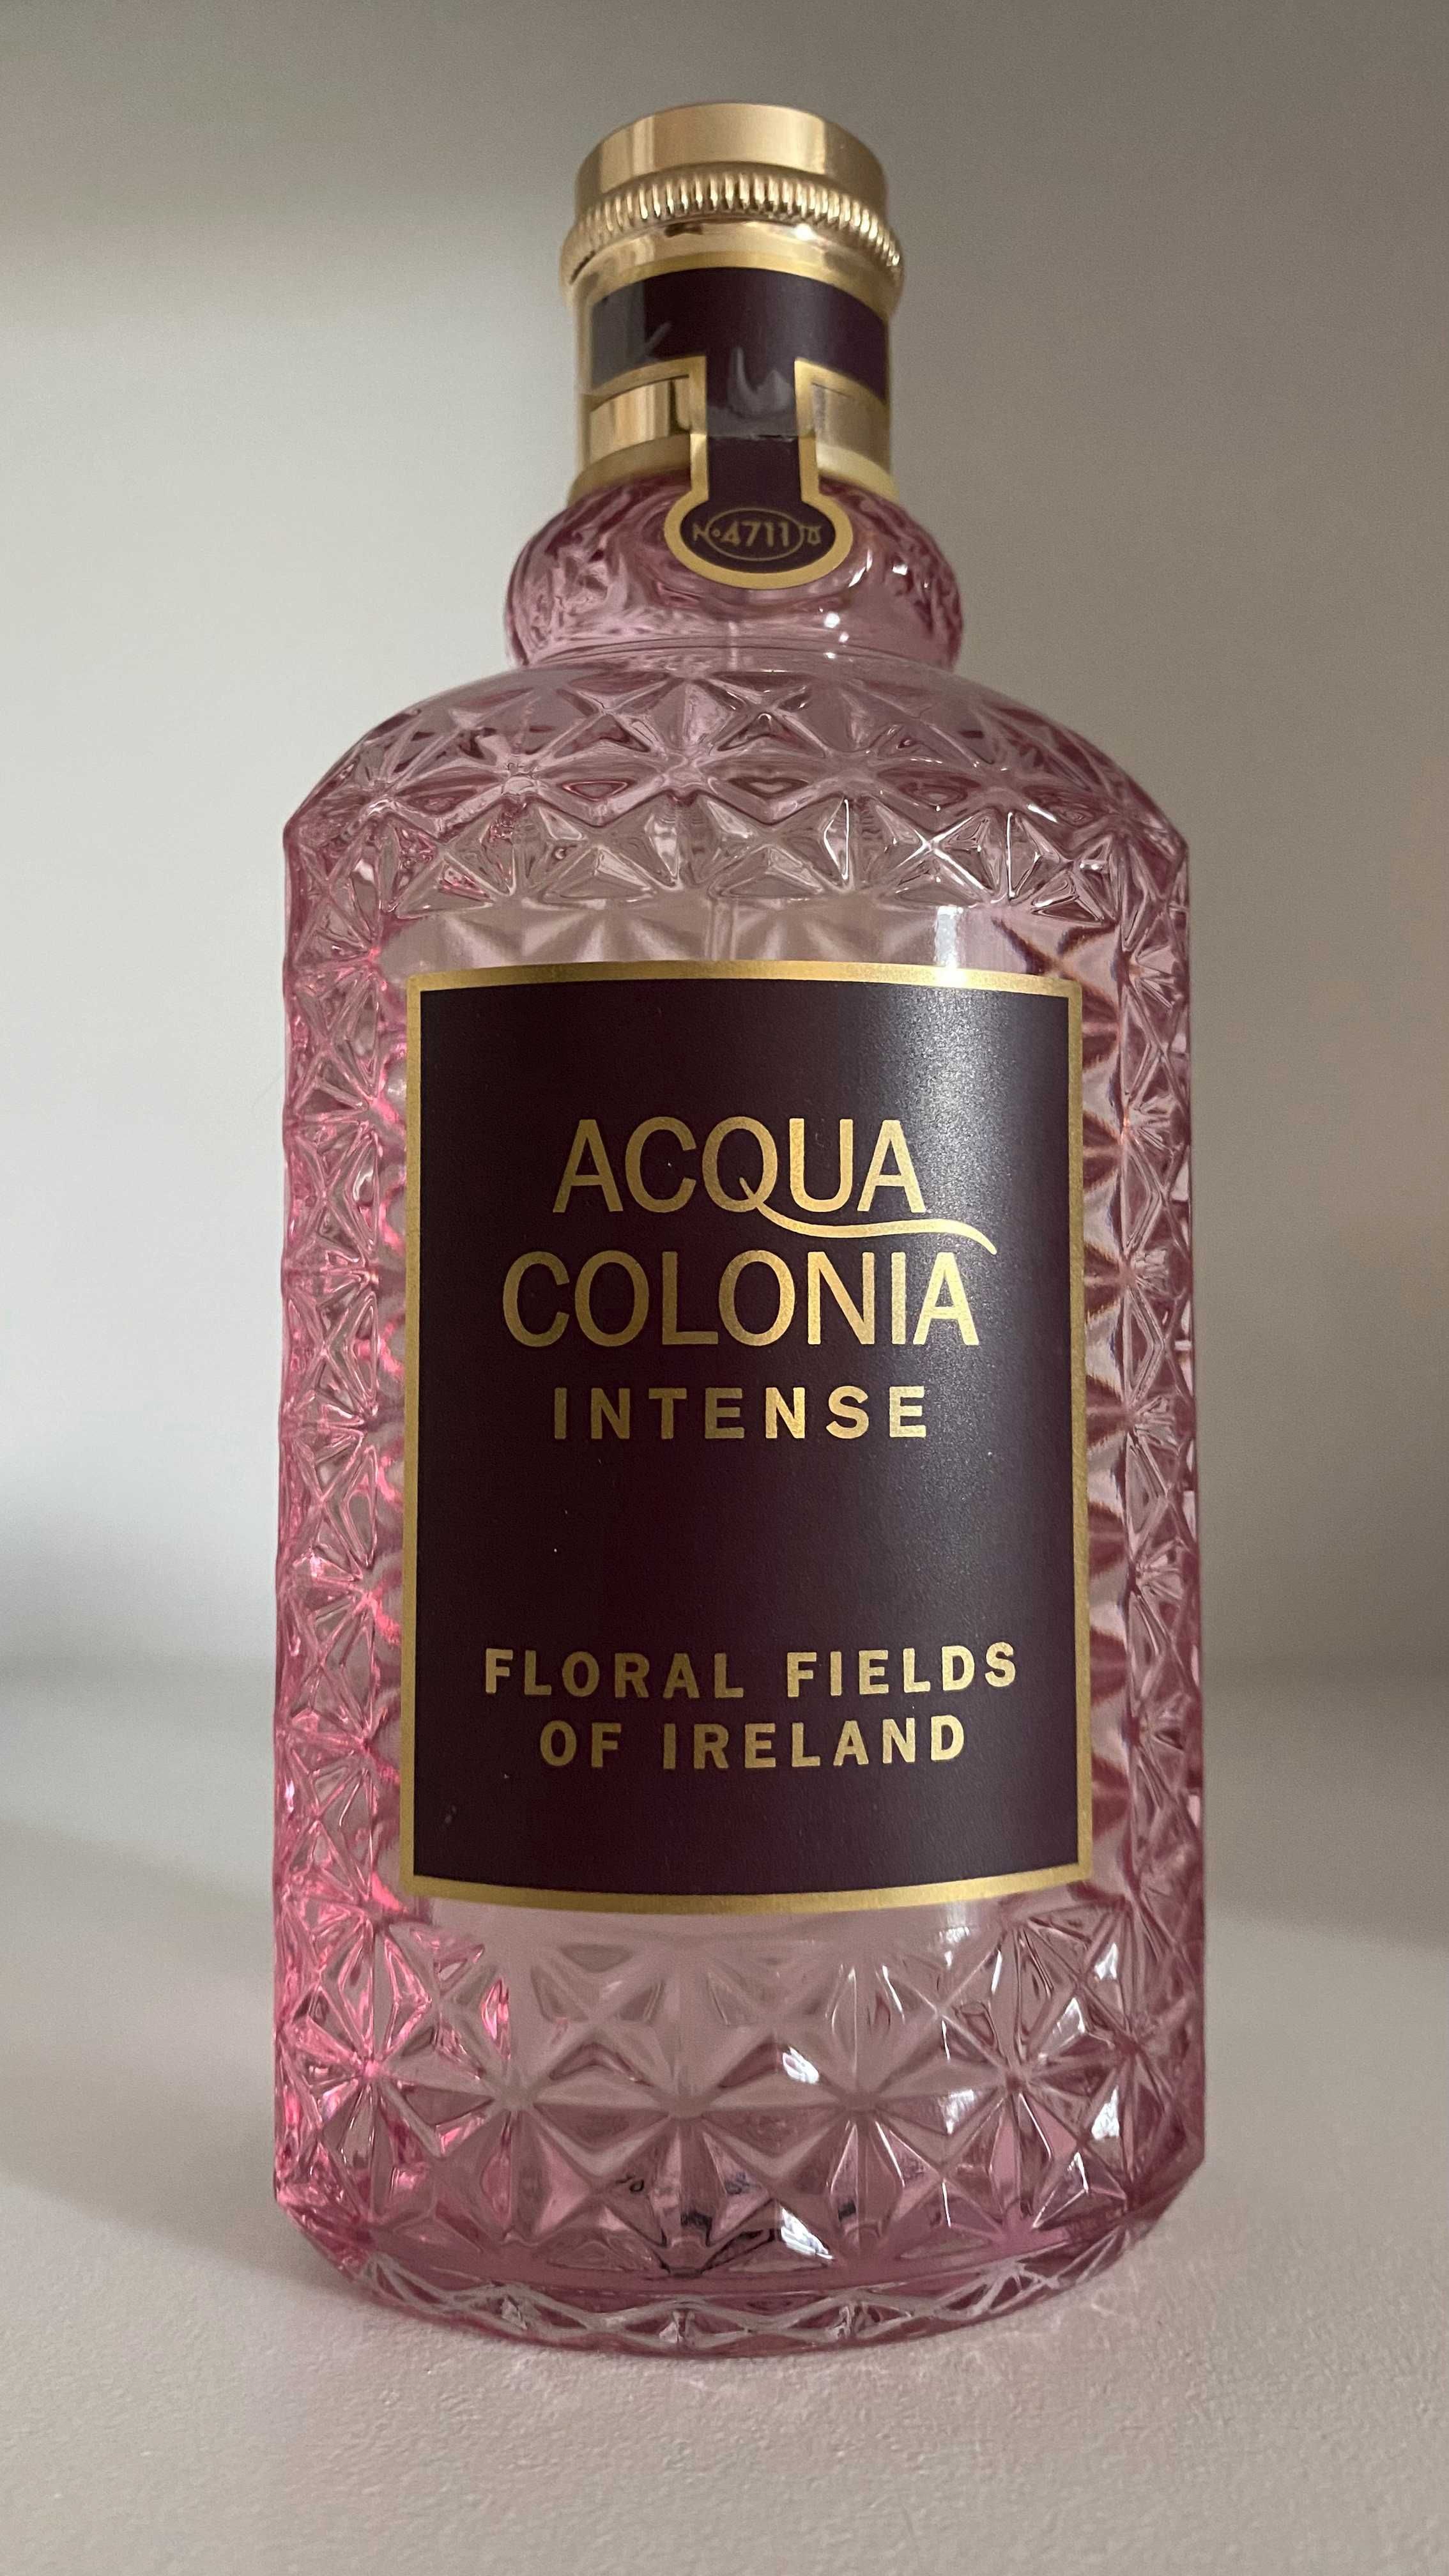 4711 Acqua Colonia Intense Floral Fields of Ireland 170 ml